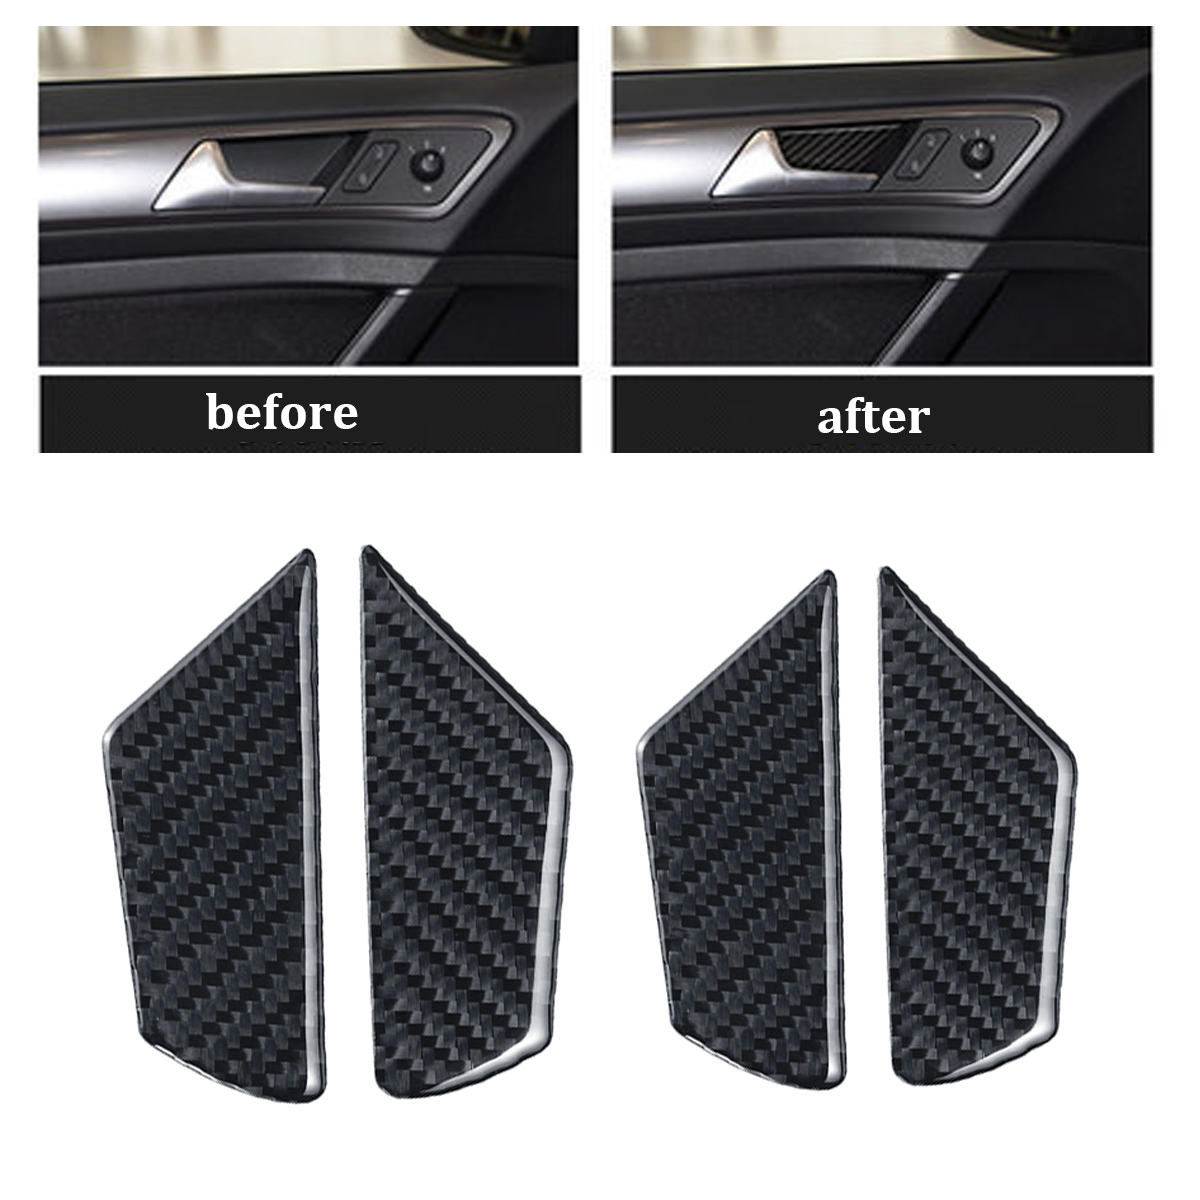 Door-Handle-Bowl-Carbon-Fiber-Cover-Trim-For-VW-Golf-7-MK7-VII-GTI-R-2014-2017-1729866-2